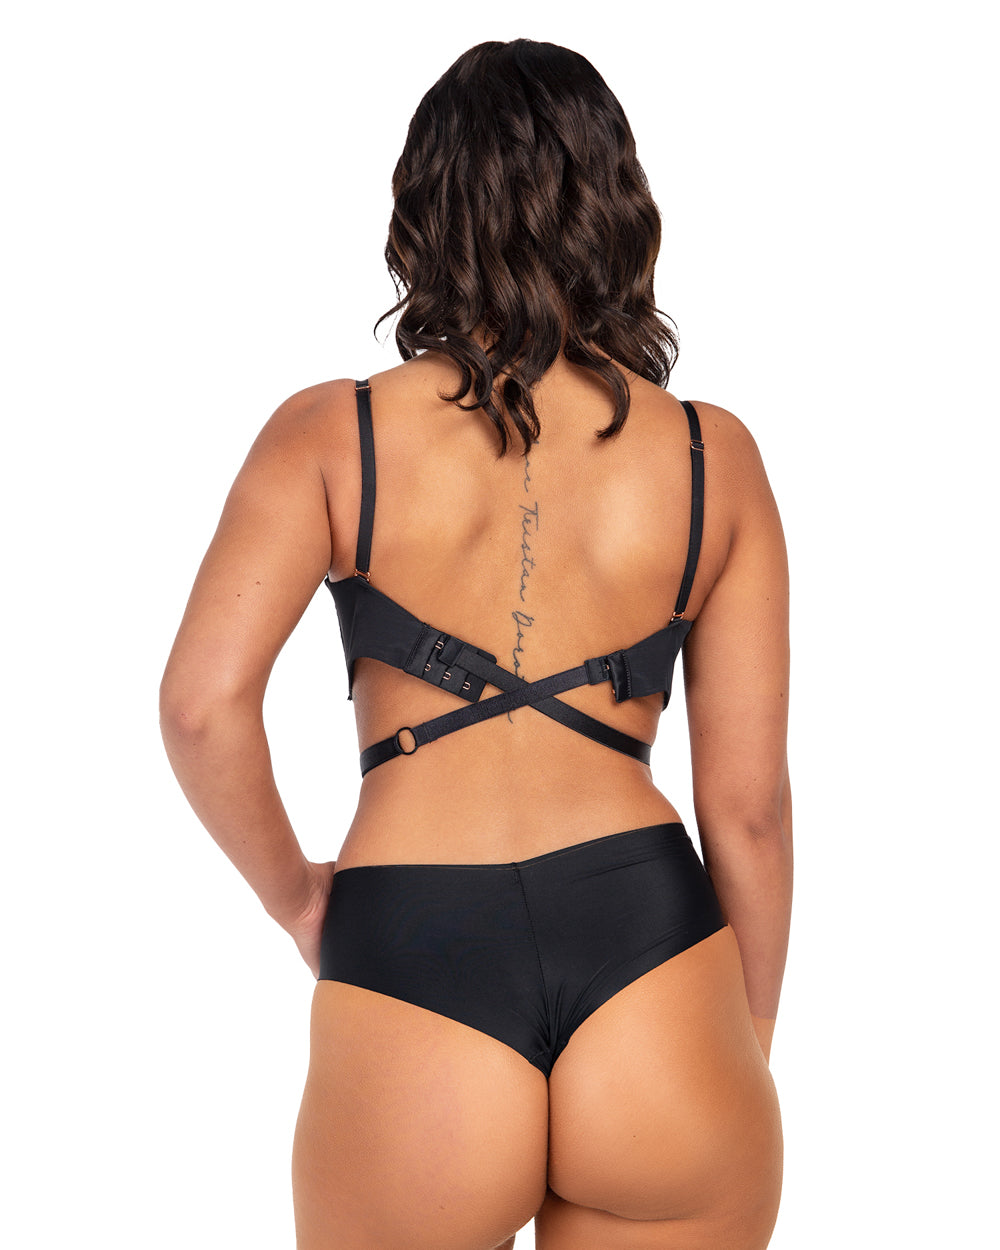 3 Pcs/Set Bra Clips - Hide Bra strap & adjust /enhance cleavage clip clear  nude black